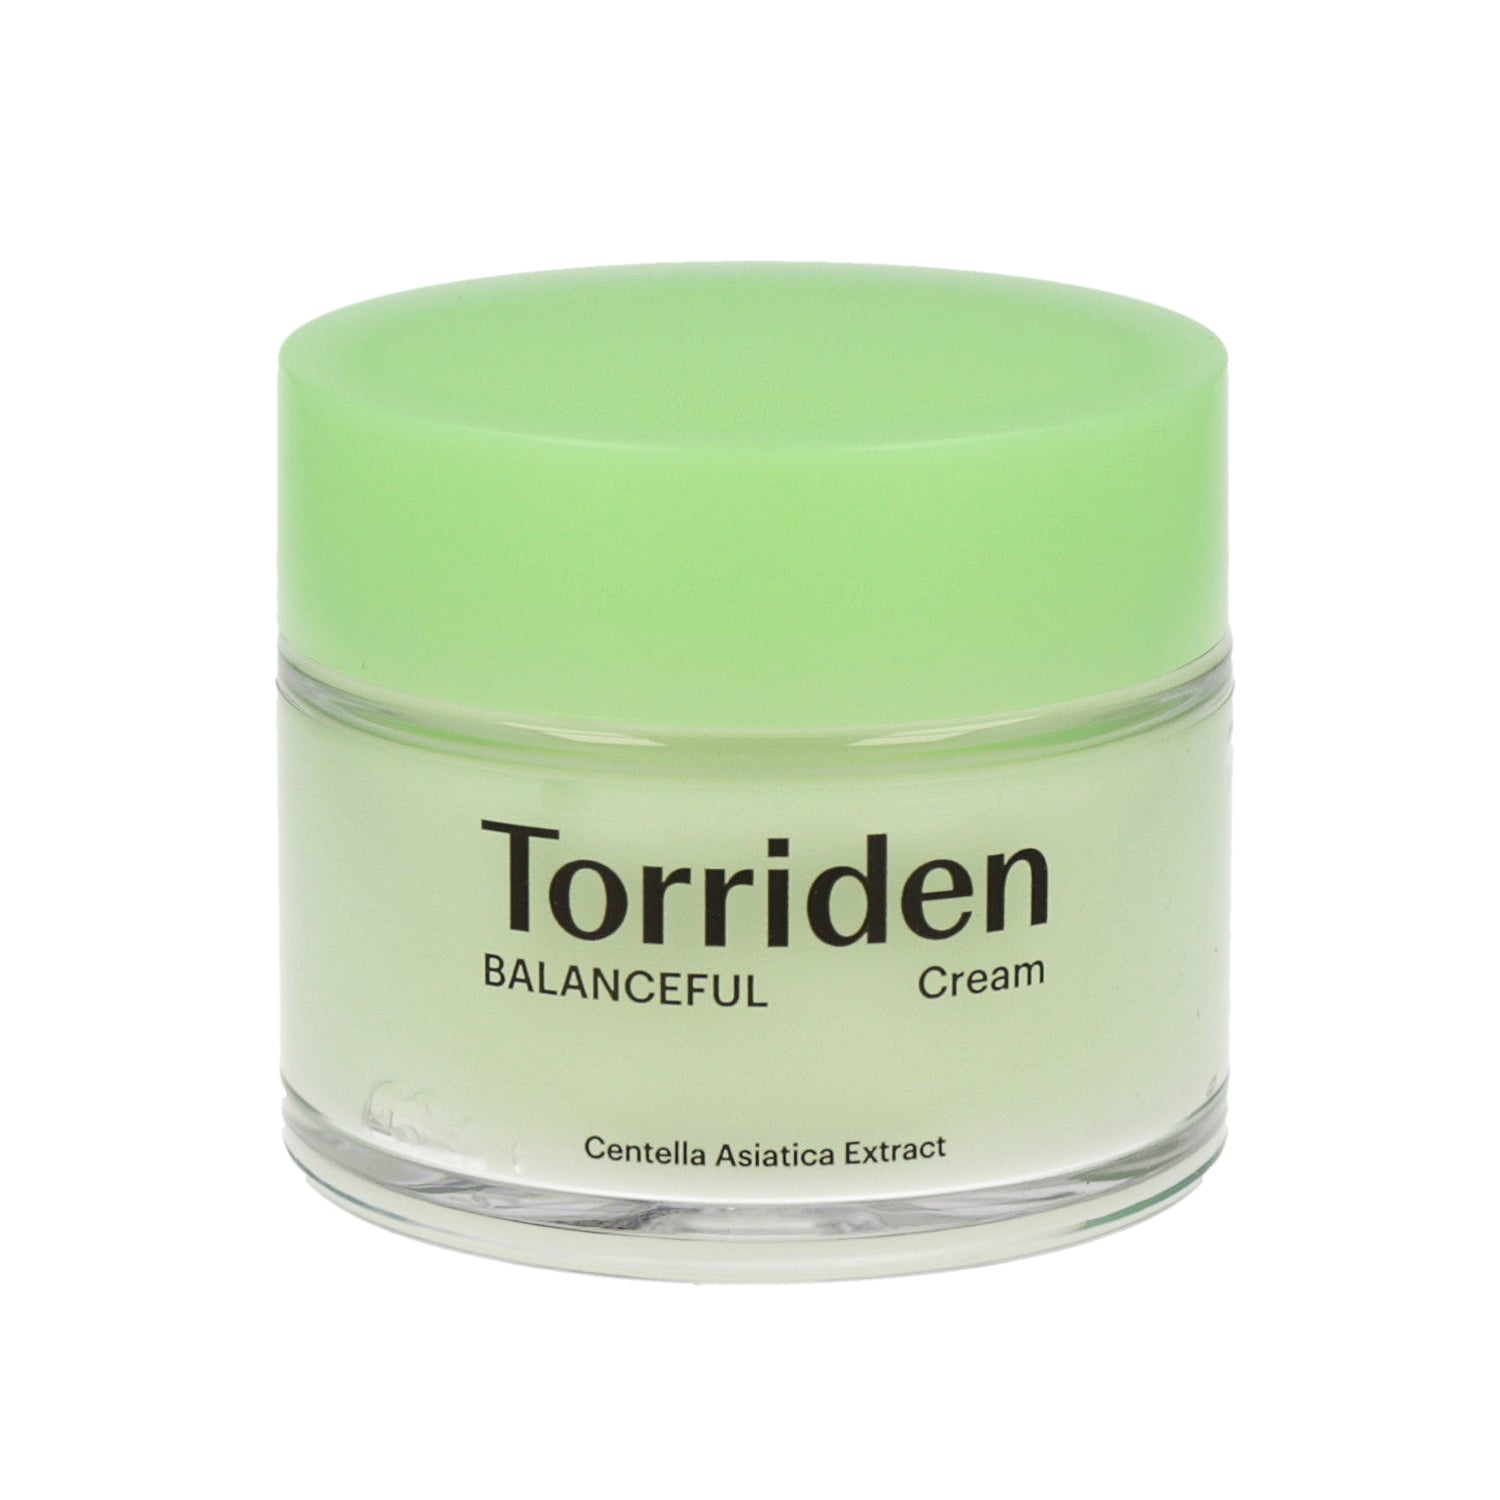 Torriden Balanceful Cica Cream 80ml - DODOSKIN